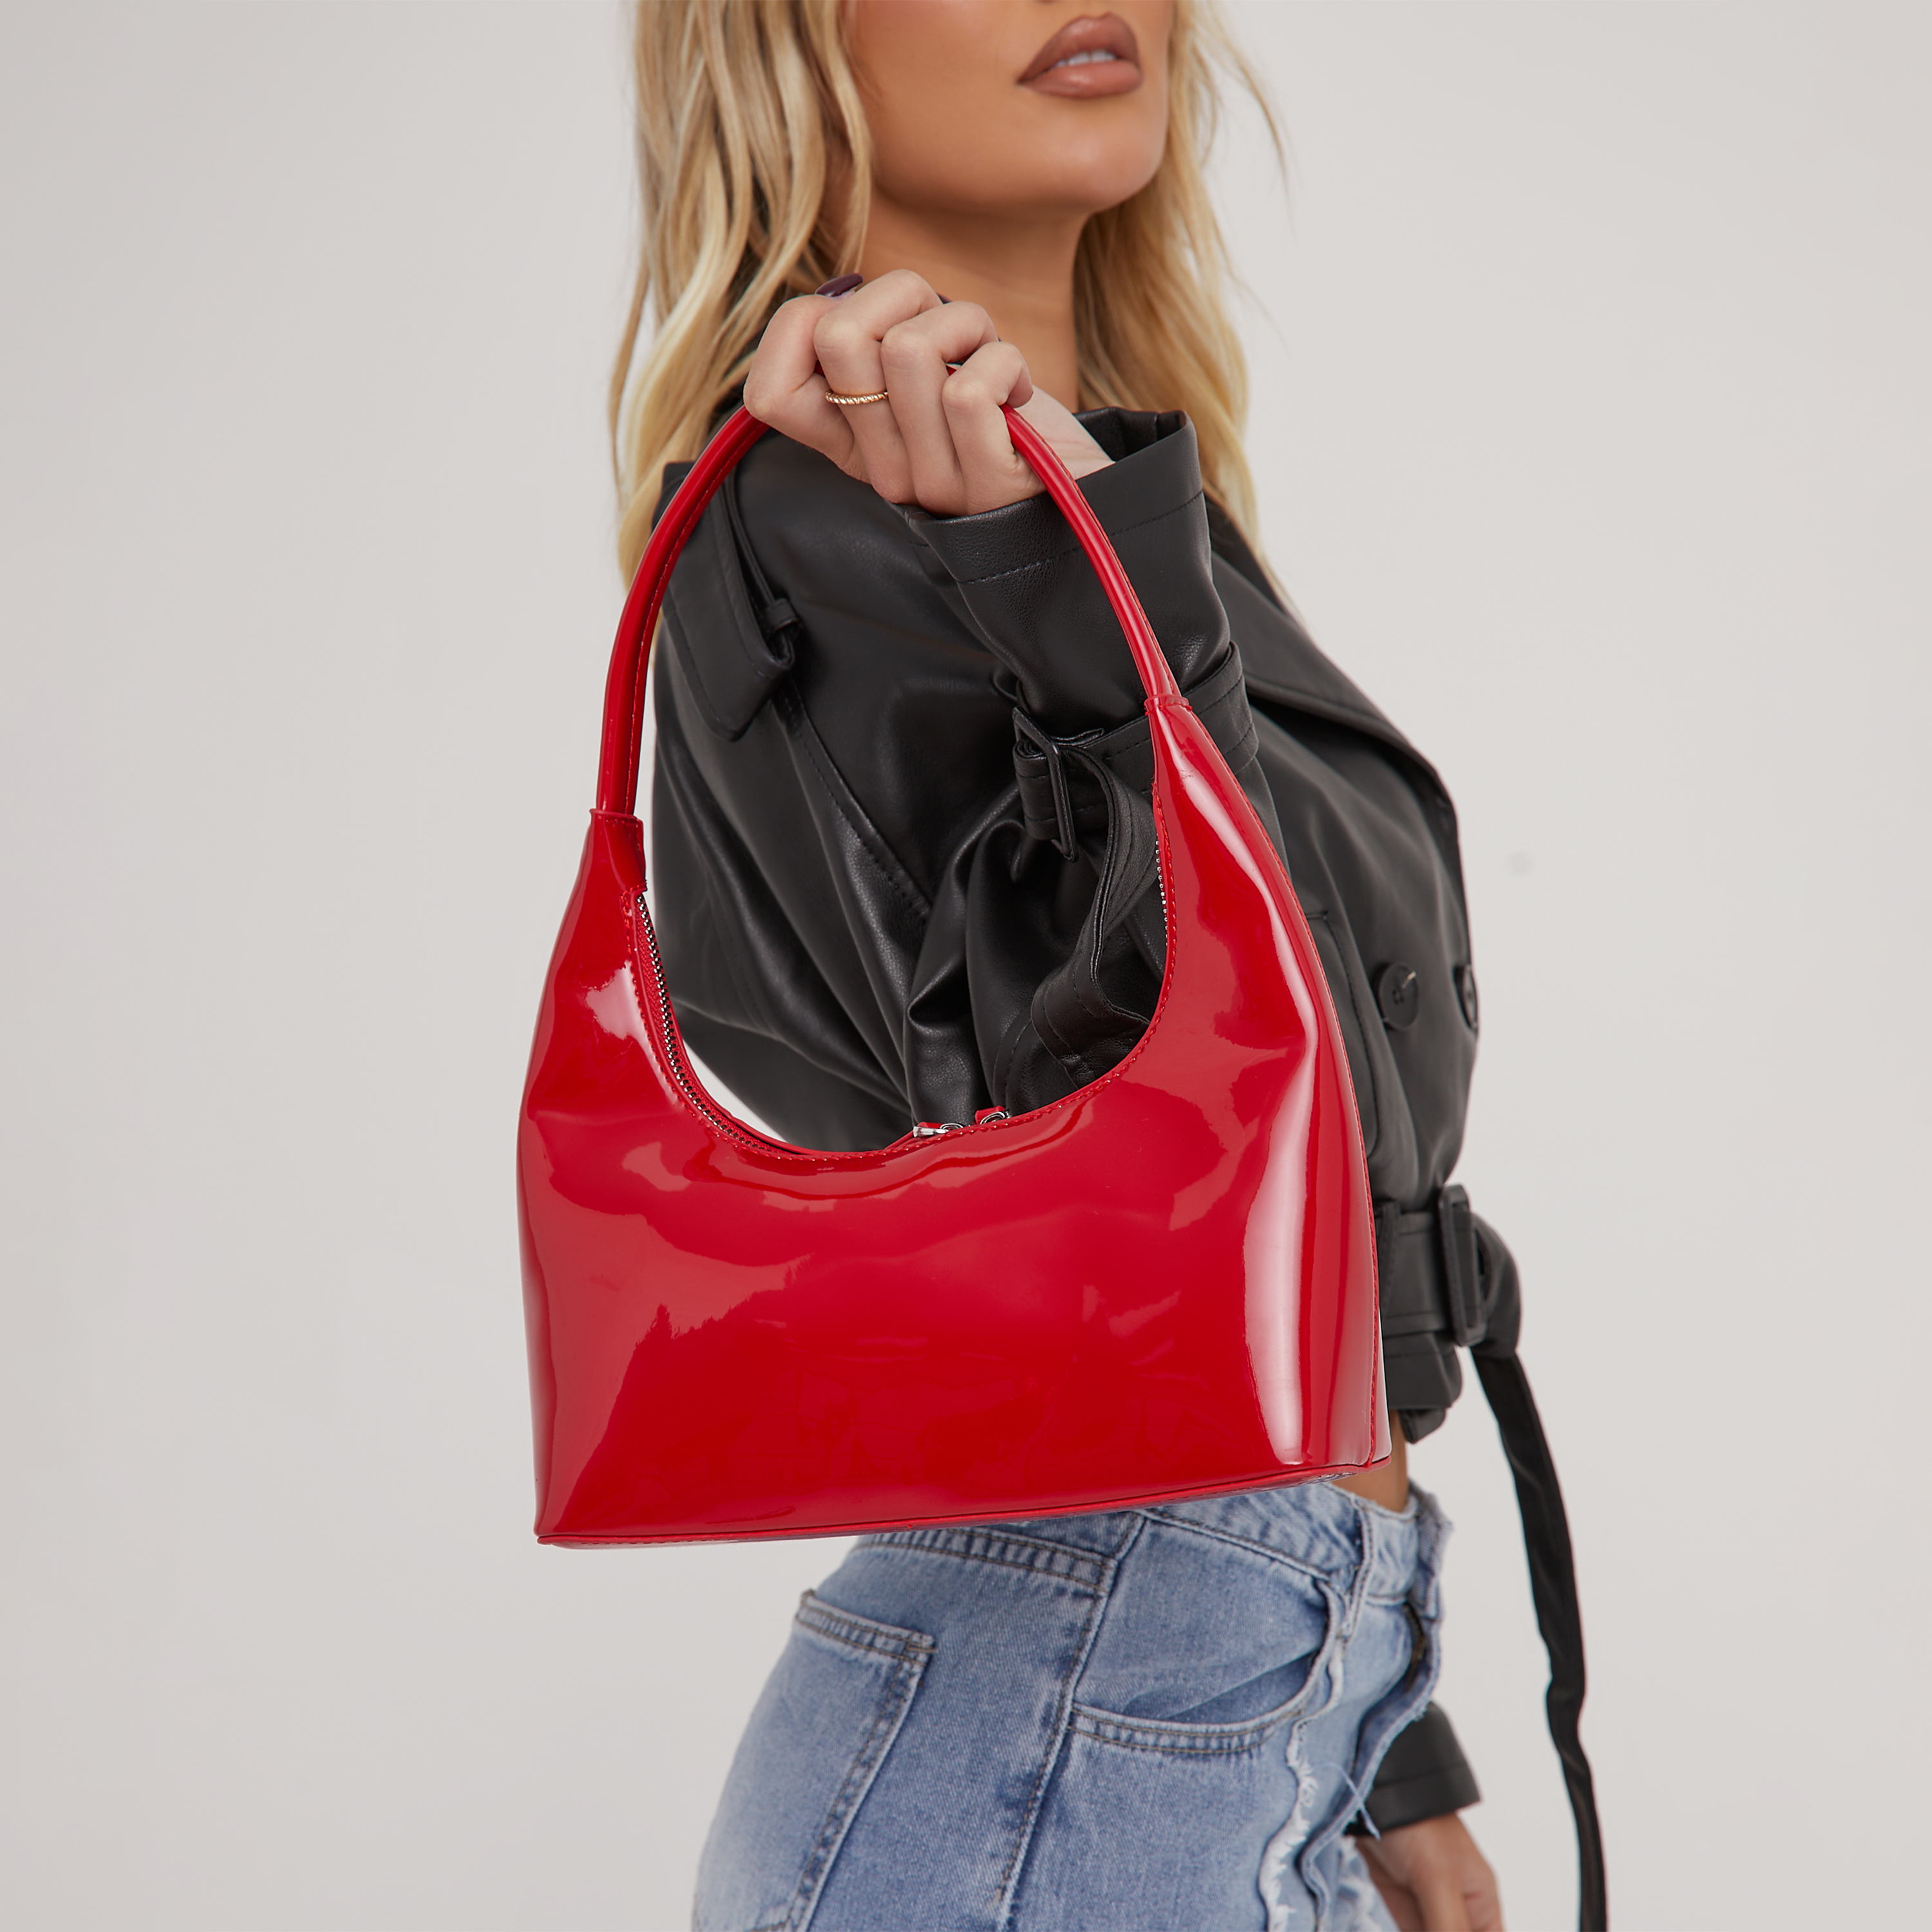 Red Bag